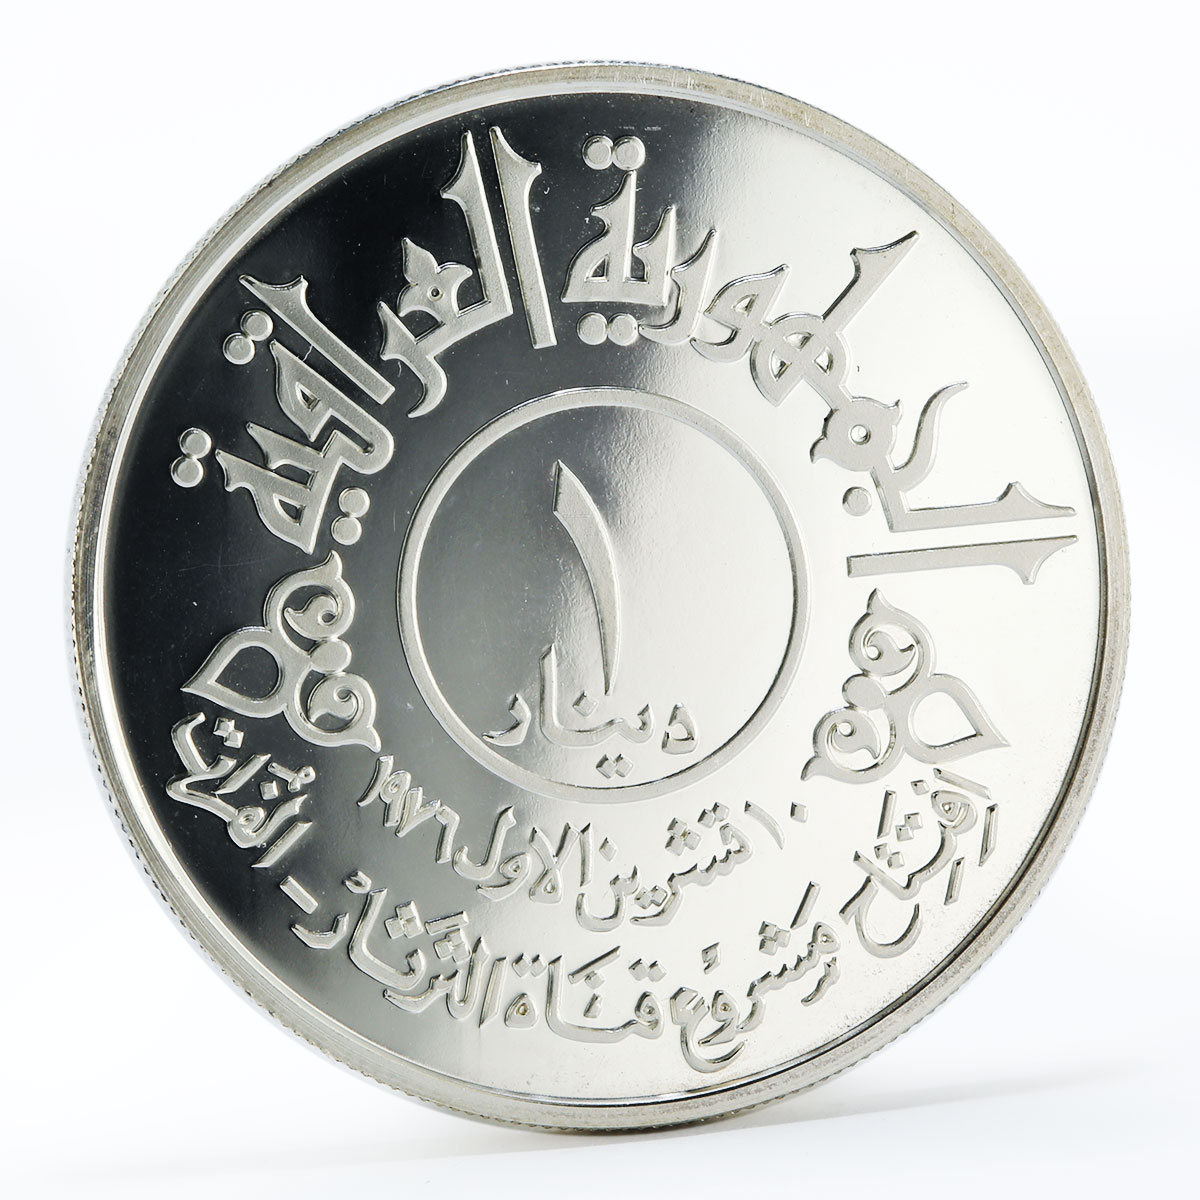 Iraq 1 dinar Tharthar Euphrates Canal proof silver coin 1977